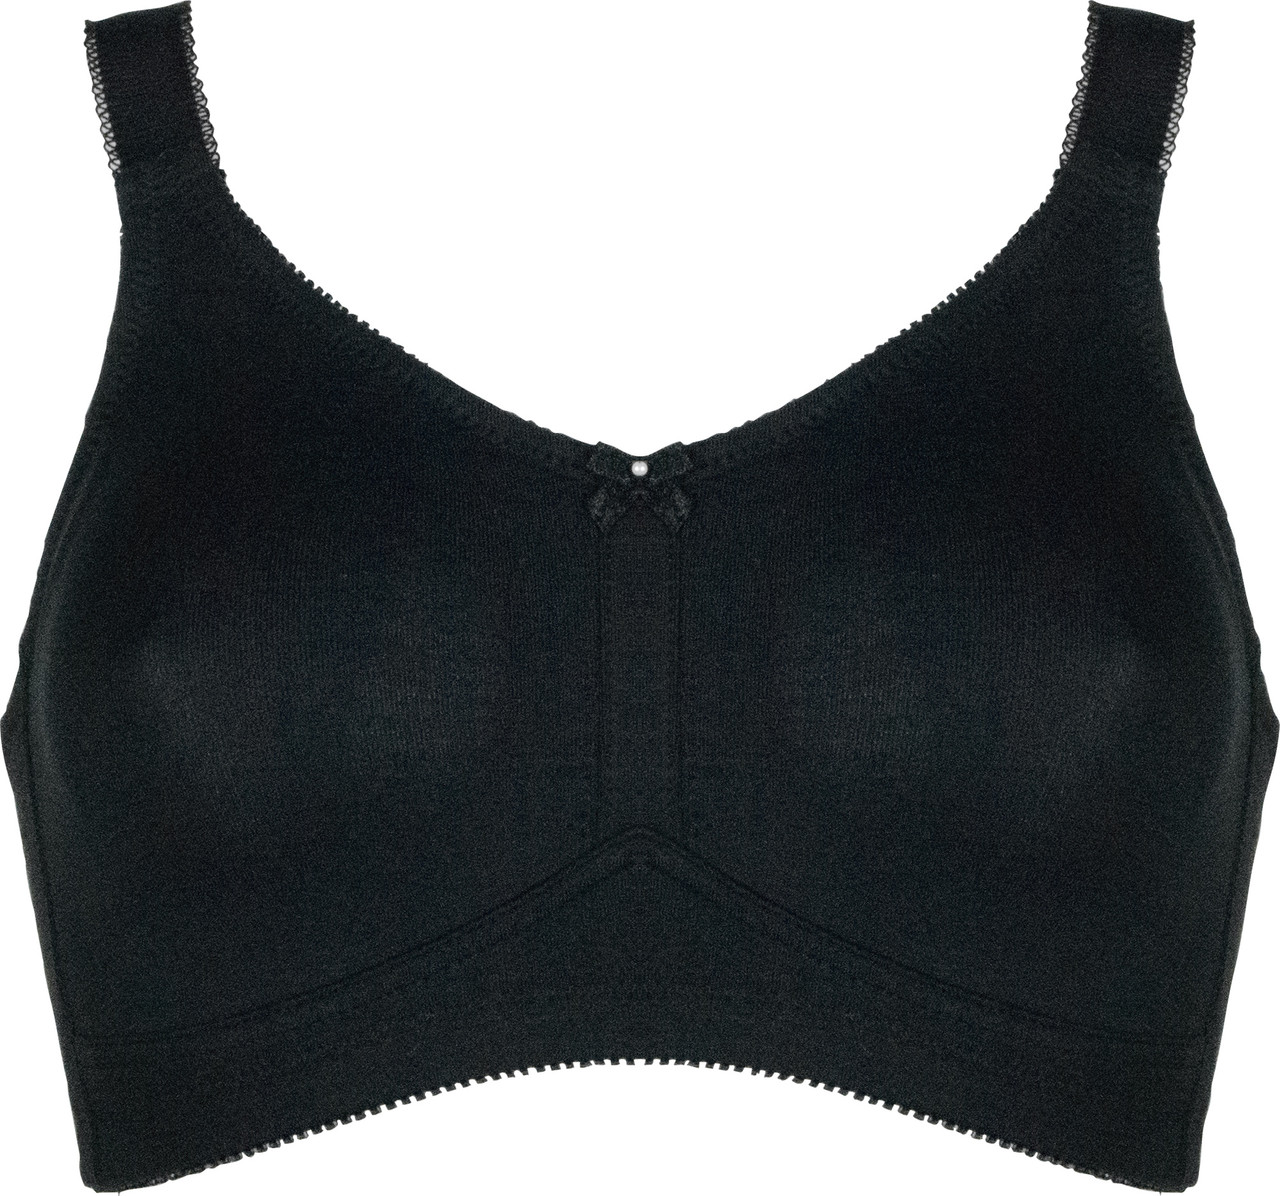 BRA - grey merino jersey 140 gr sports bra for woman, Rewoolution